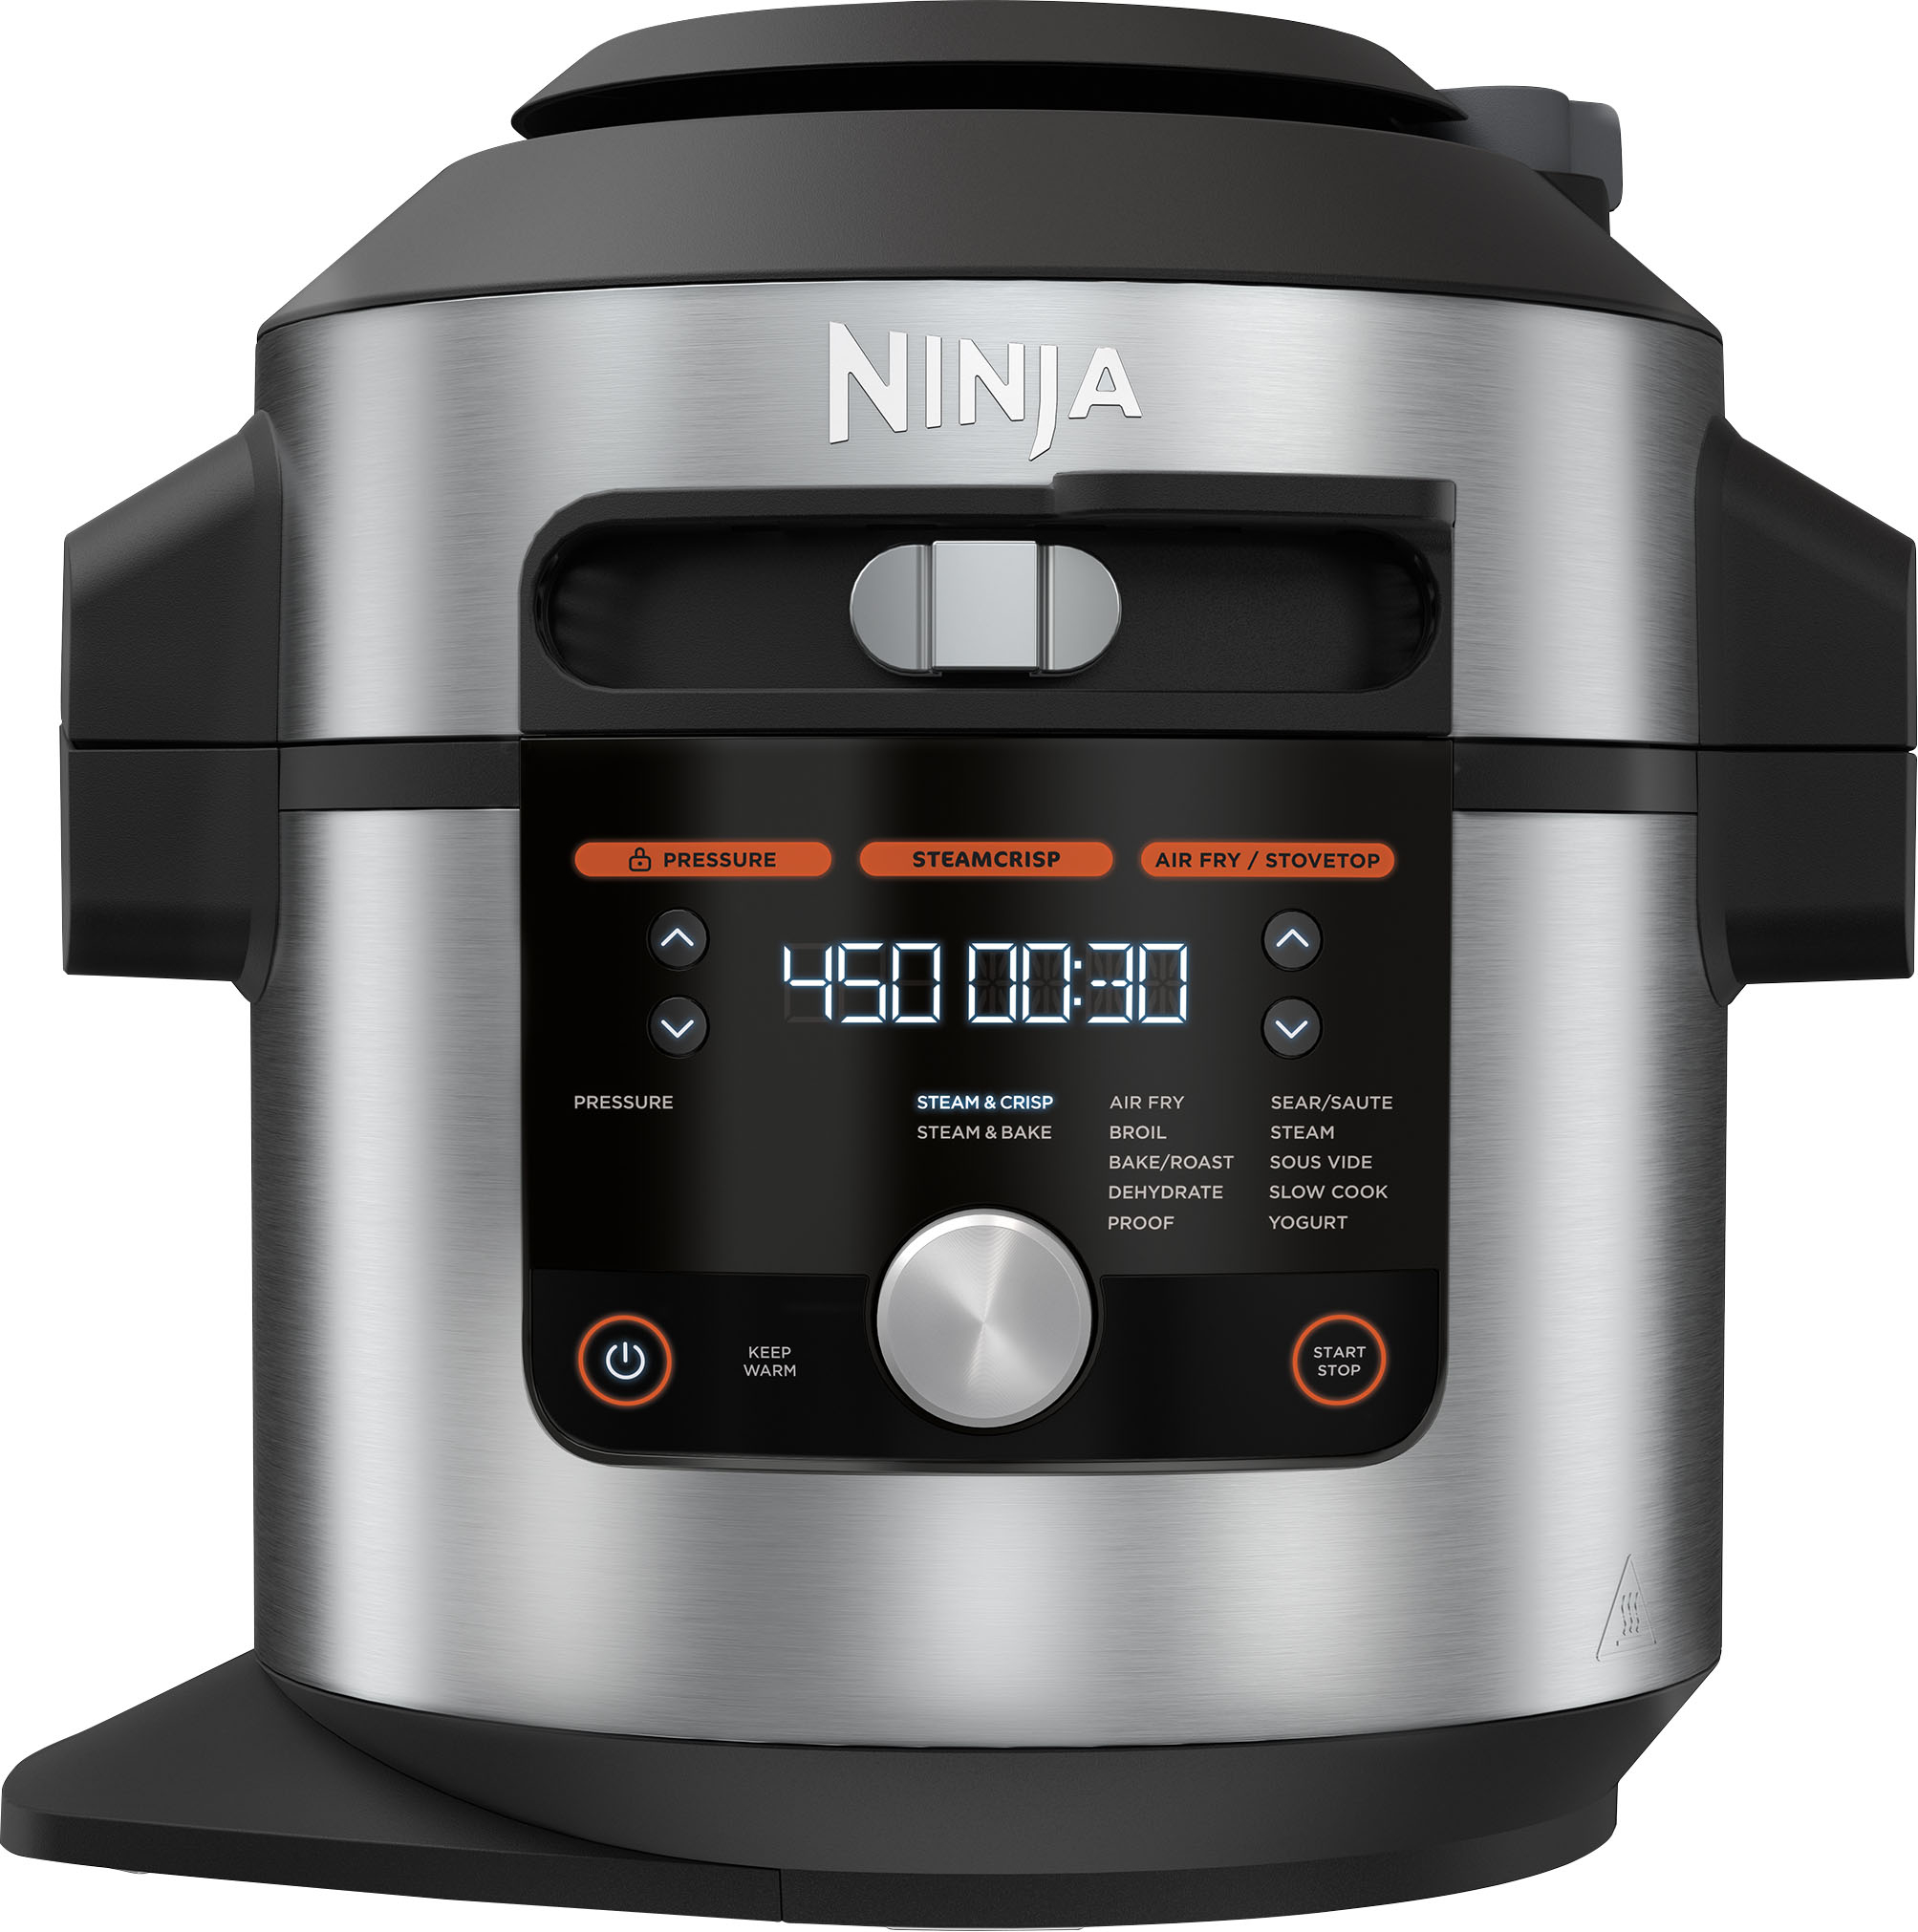 8qt Ninja Foodi 14-in-1 XL Pressure Cooker Steam Fryer with SmartLid  Unboxing & 1st Cook 